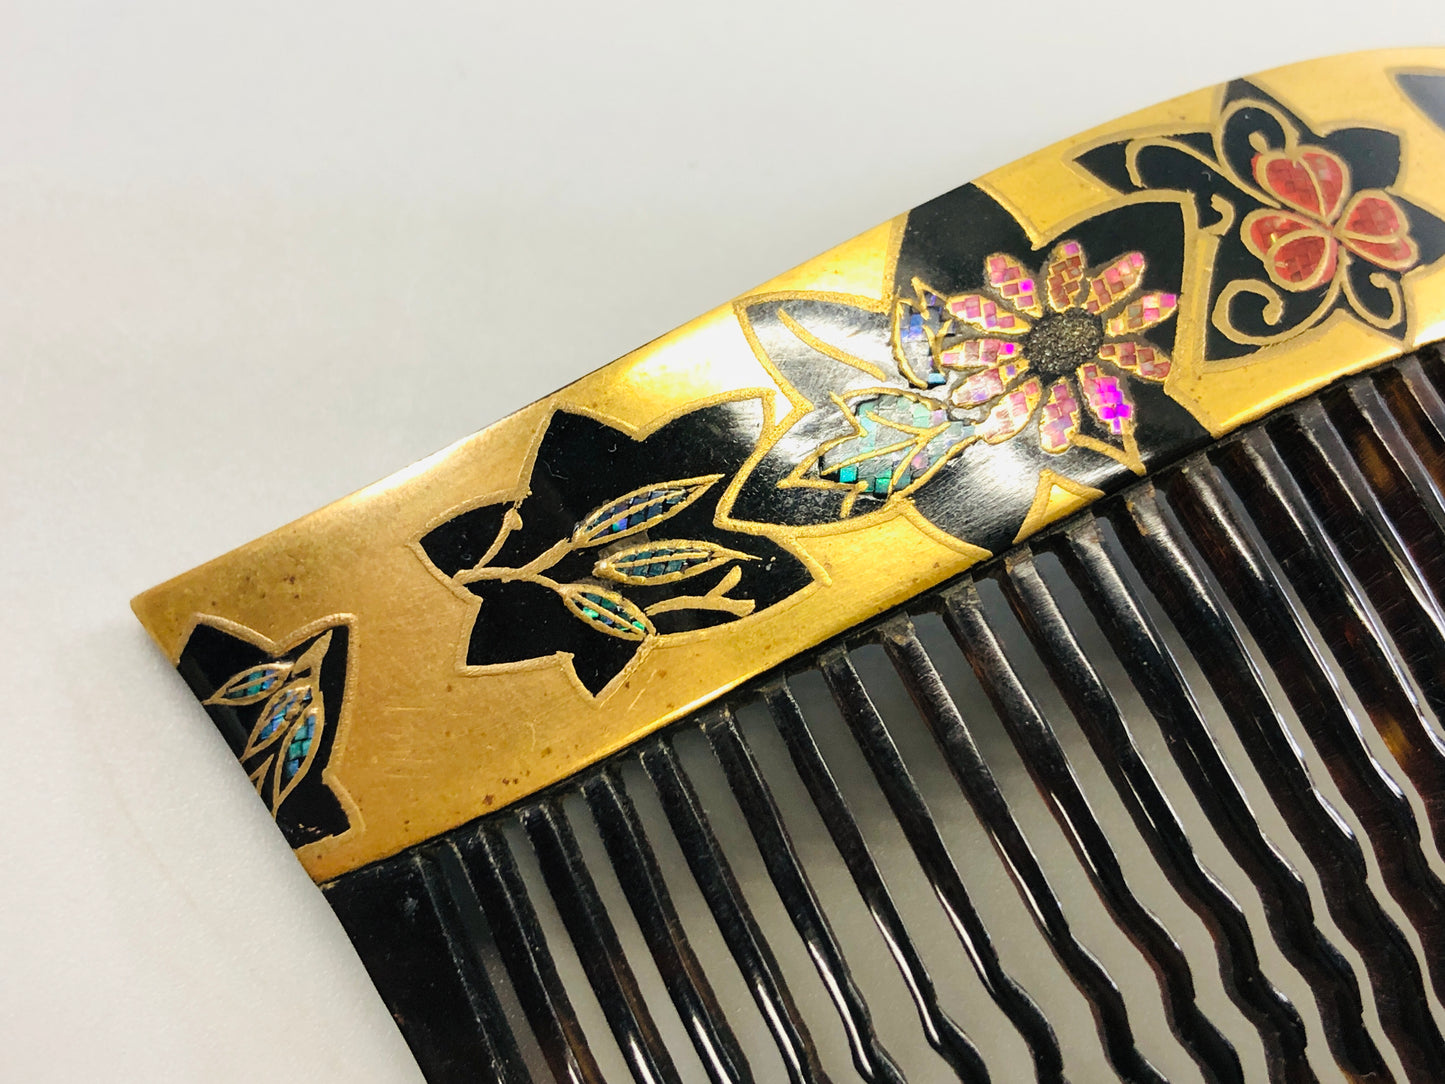 Y5349 KOUGAI  Makie Comb signed box hair dressing tools Japan kimono accessory